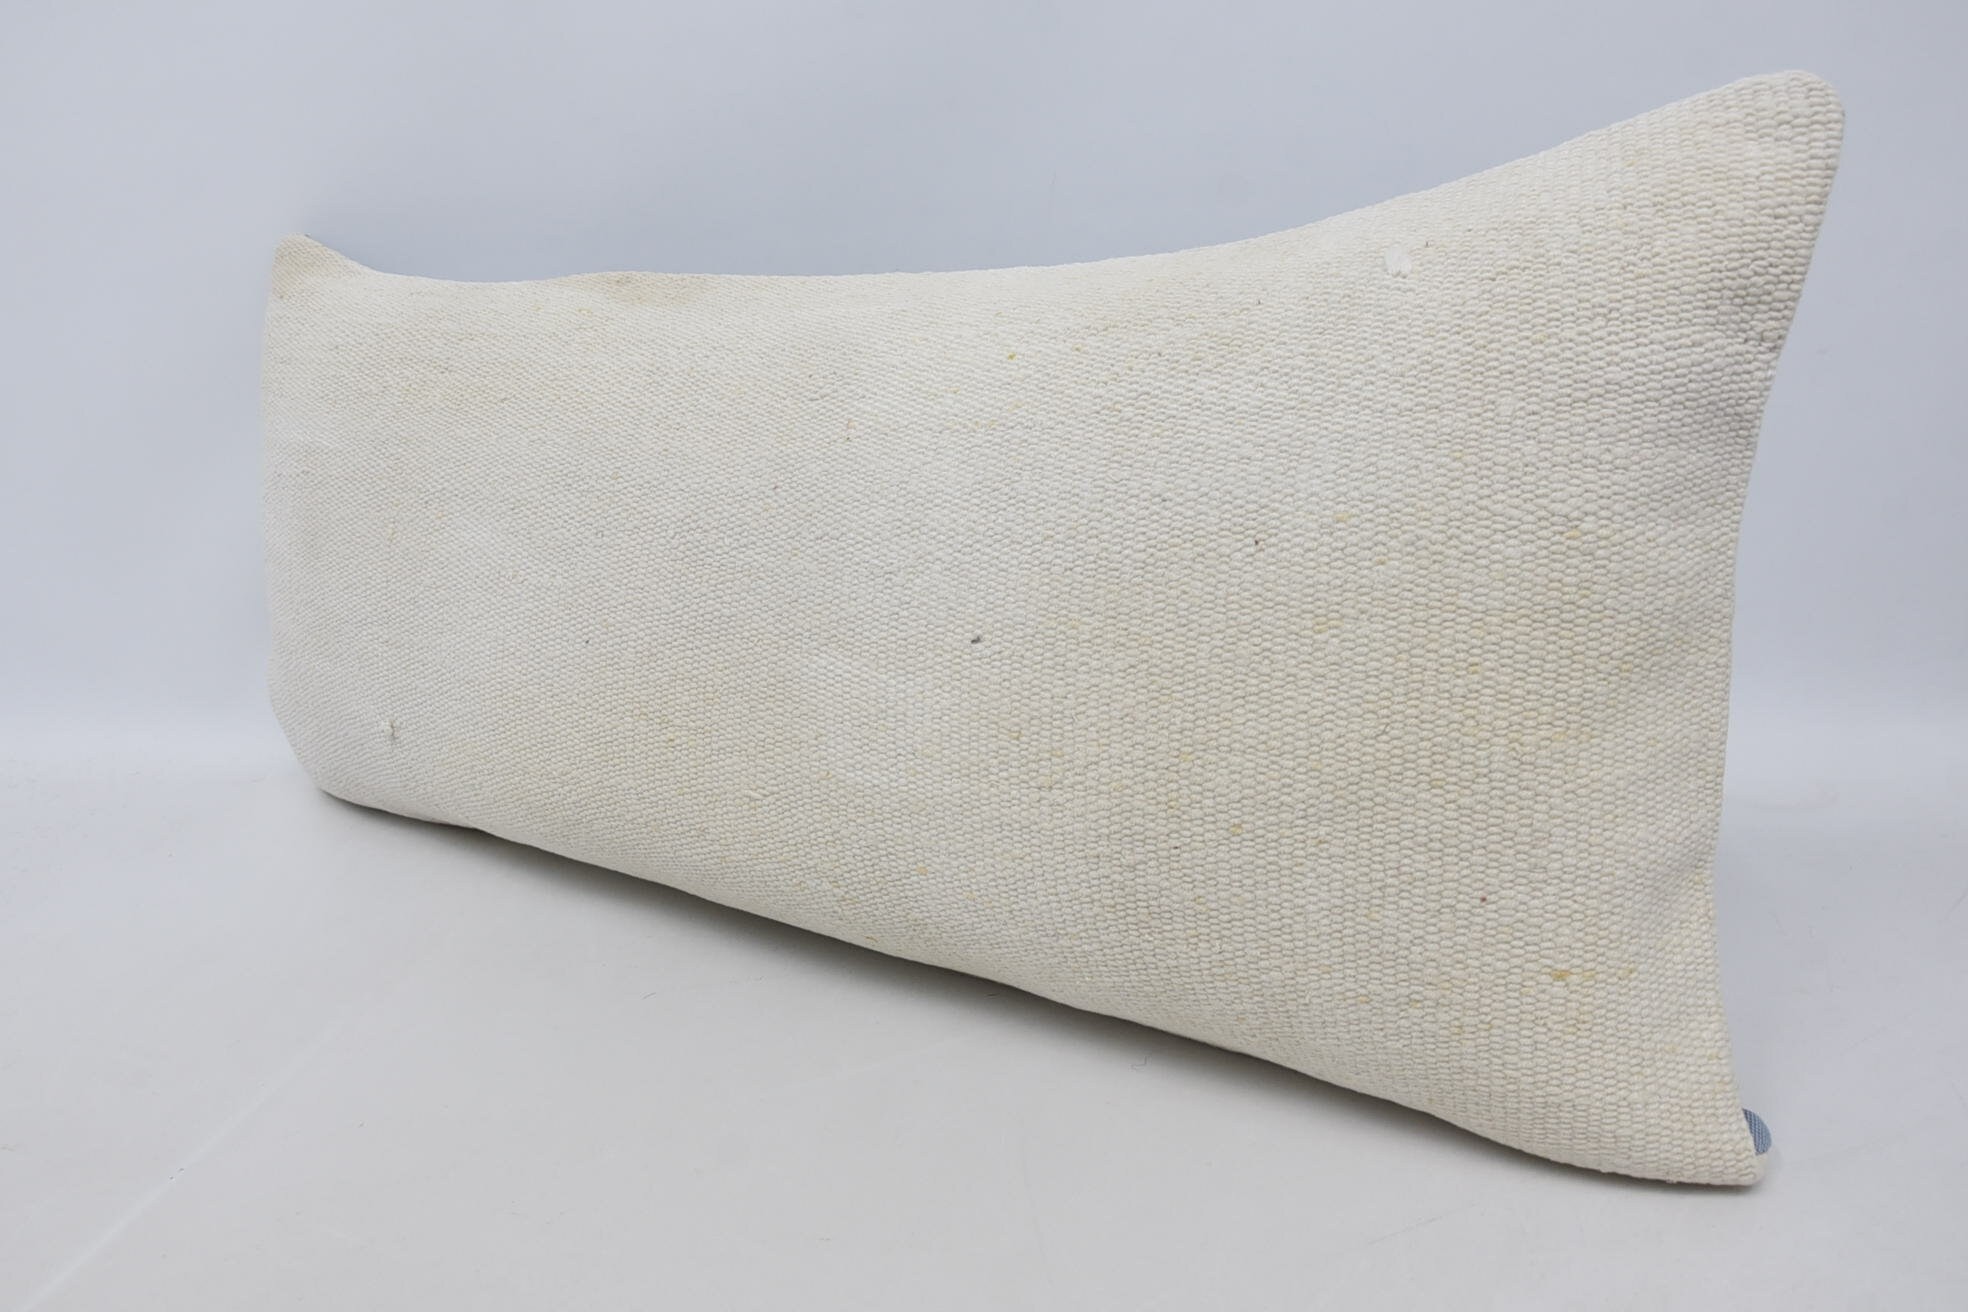 Vintage Kilim Pillow, Boho Pillow, Customized Cushion Cover, Kilim Pillow Cover, 16"x36" White Pillow Sham, Handwoven Pillow Cover Pillow